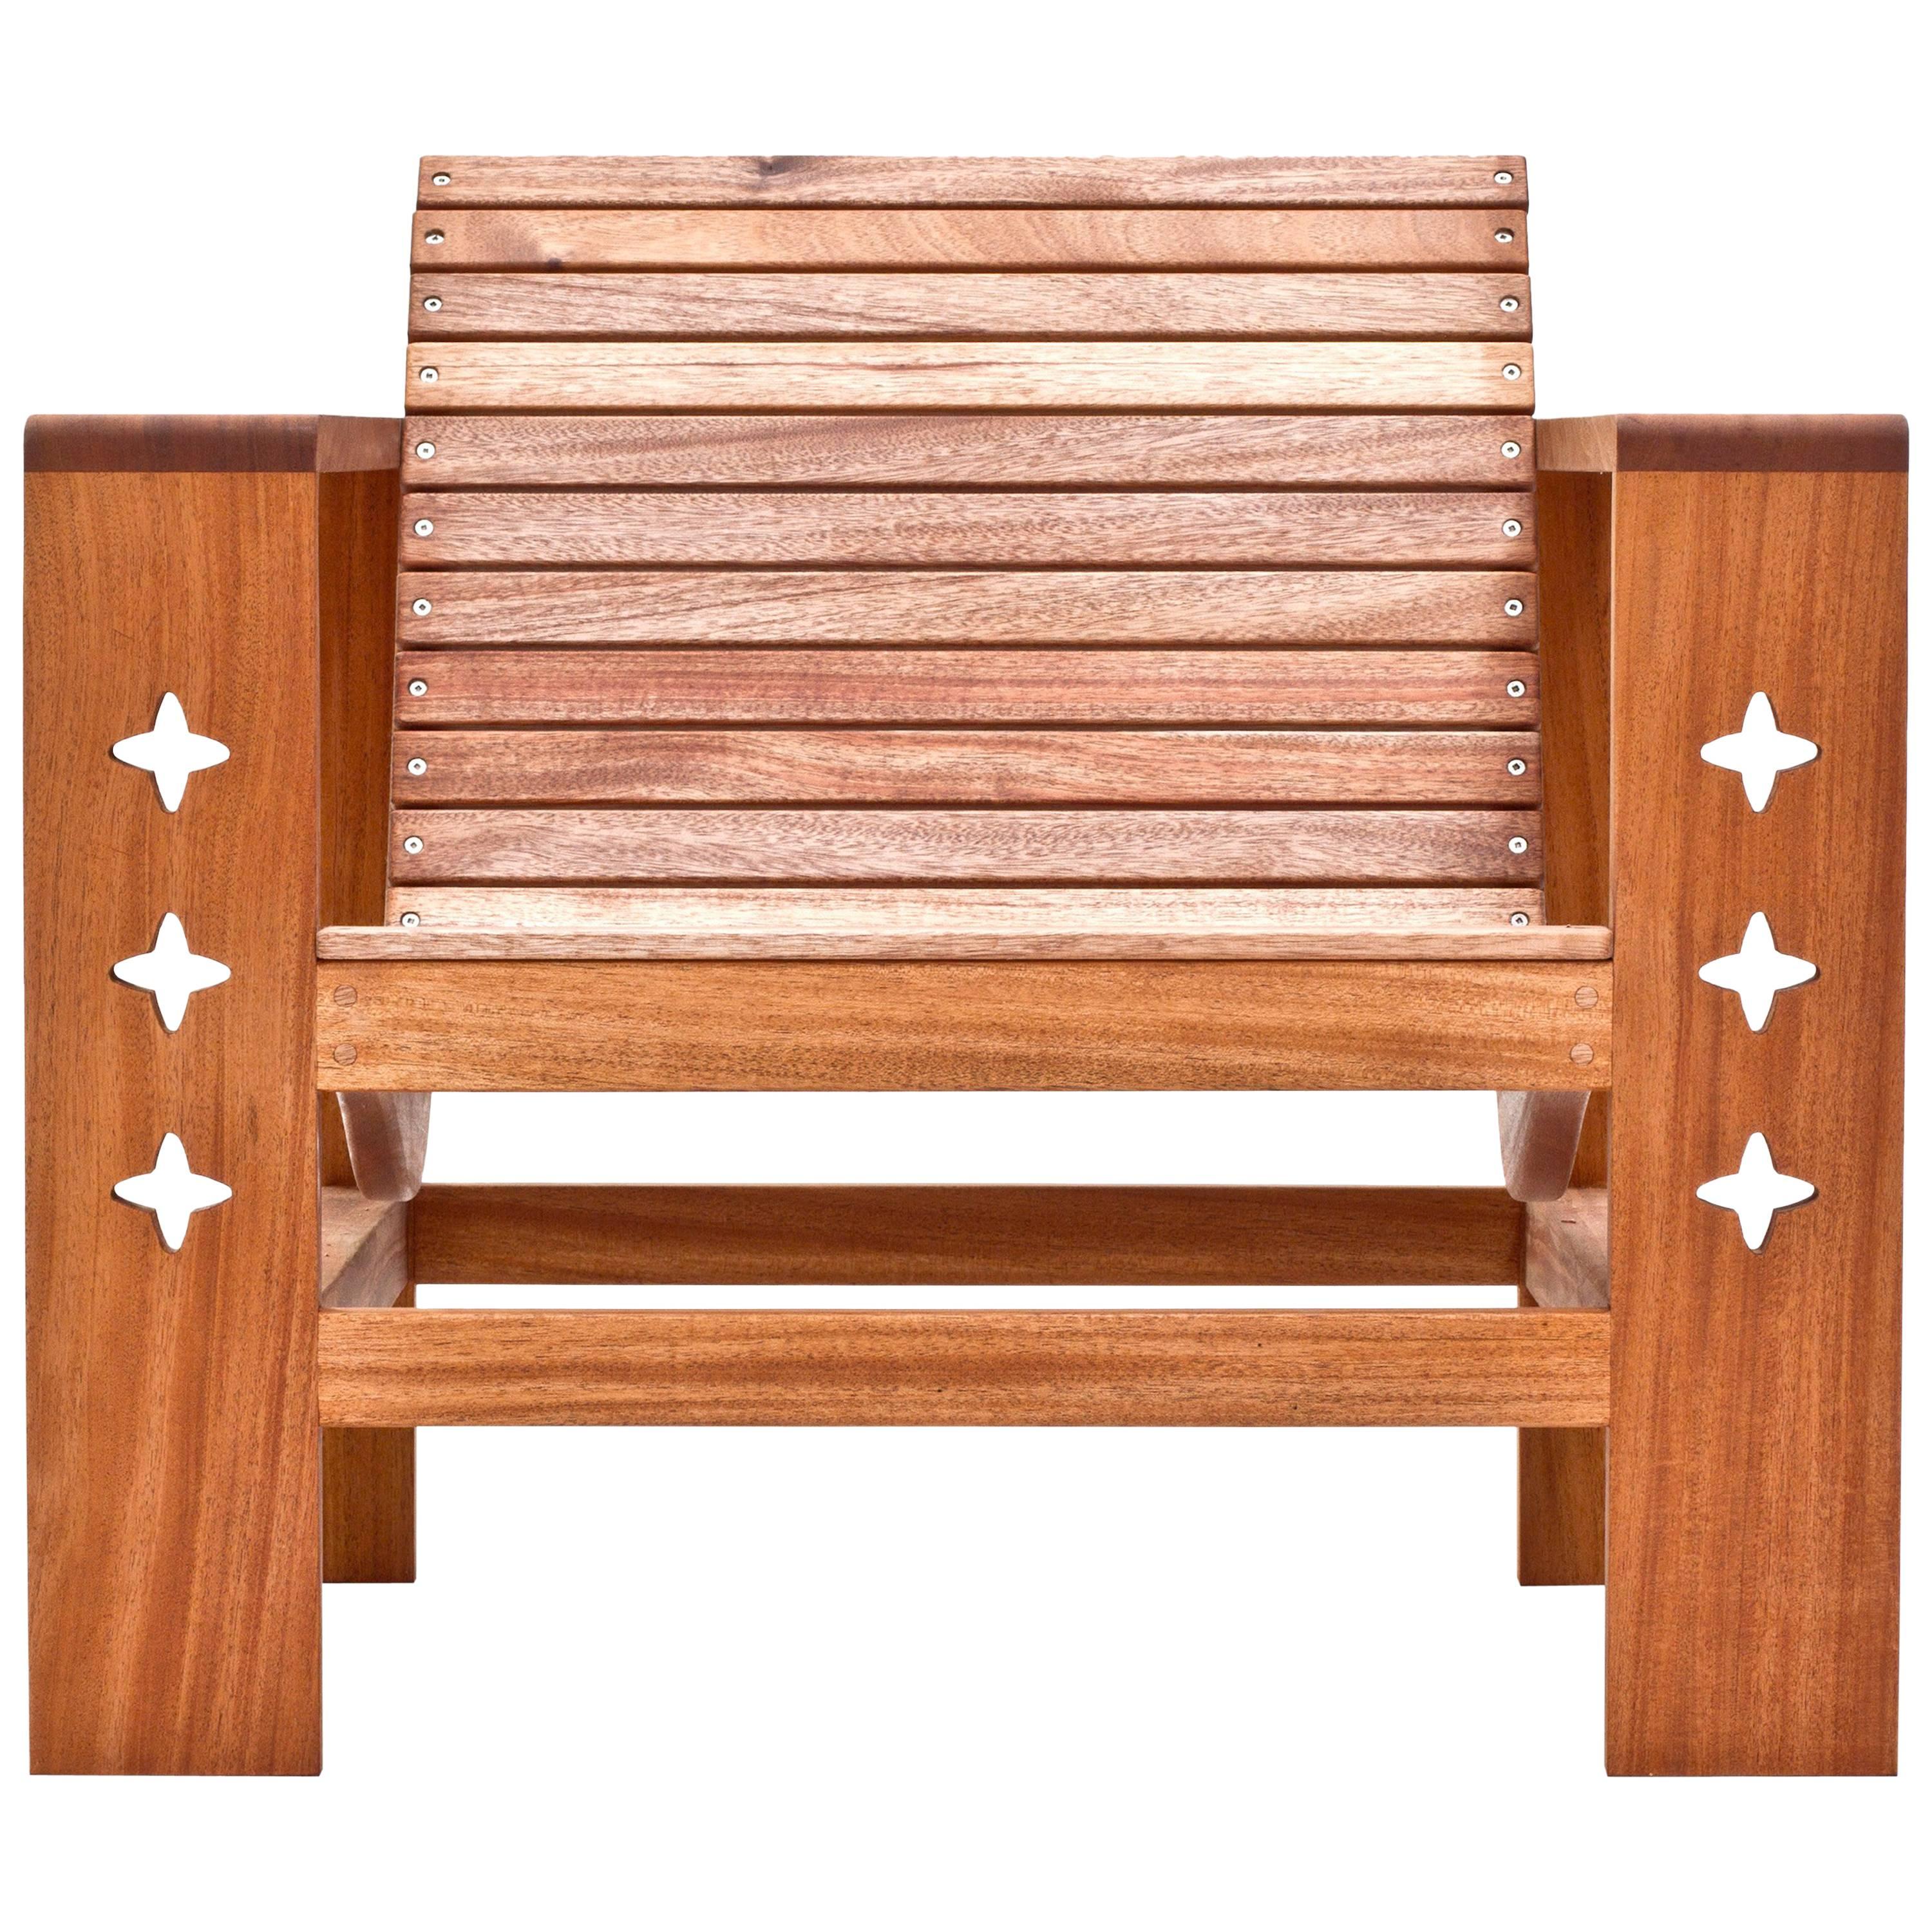 Uti 'Ooh-Tee' Loungesessel aus Mahagoni mit natürlicher Oberfläche, Wooda Original